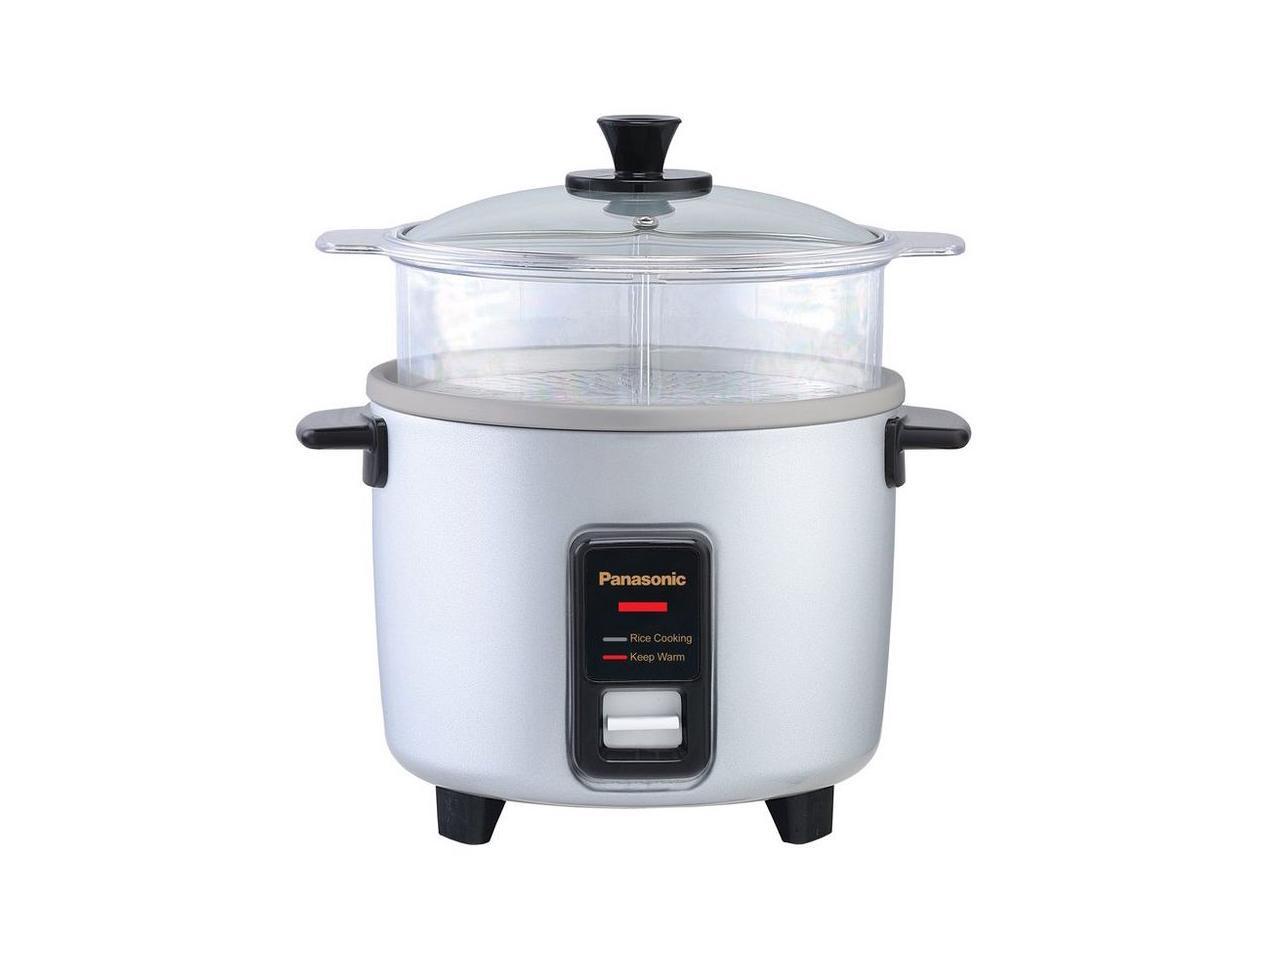 PANASONIC Rice Cooker/Steamer SR-Y18FGJ SILVER (10 cup) – NeweggFlash.com